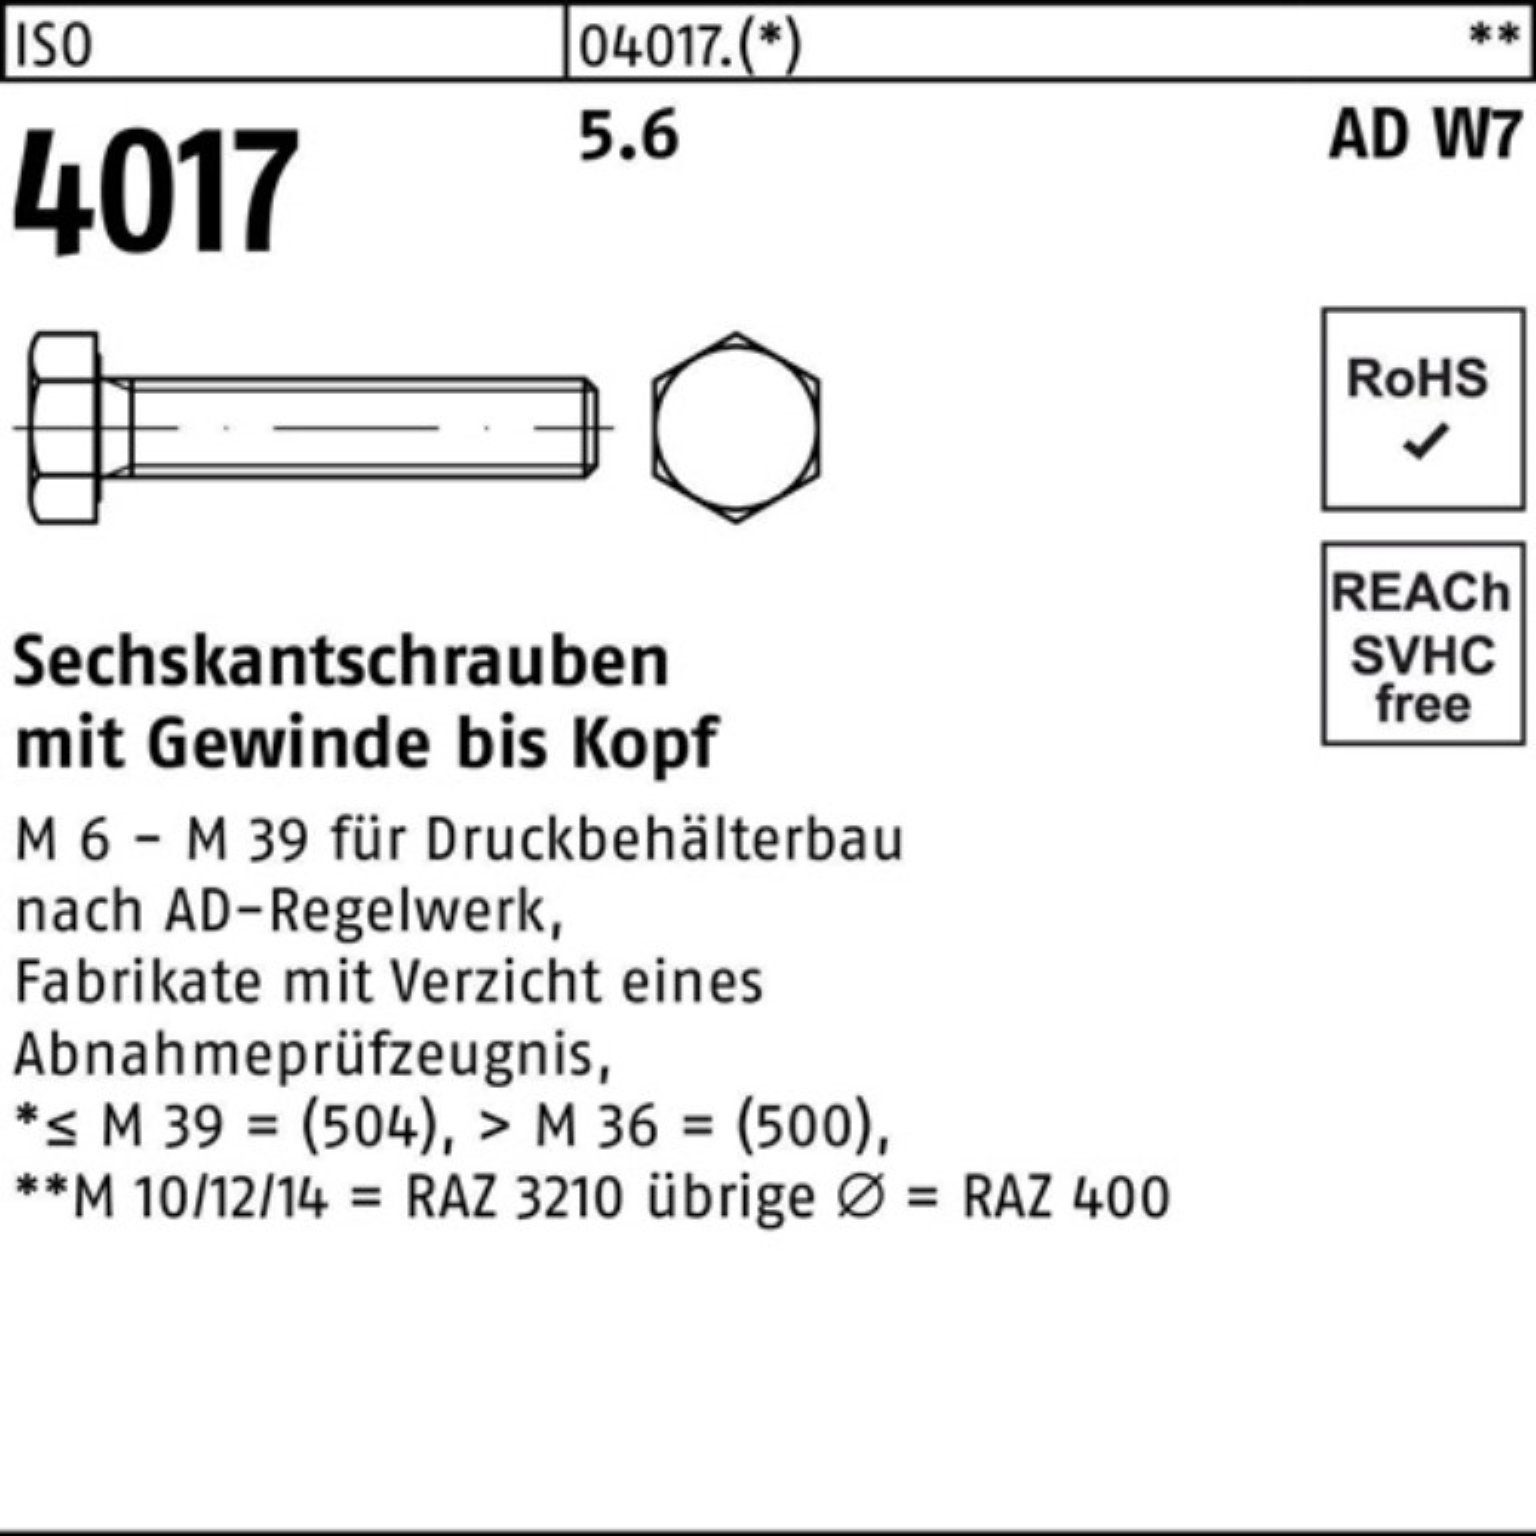 25 W7 VG StückIS Bufab AD Pack Sechskantschraube ISO 5.6 Sechskantschraube 100er M22x 50 4017